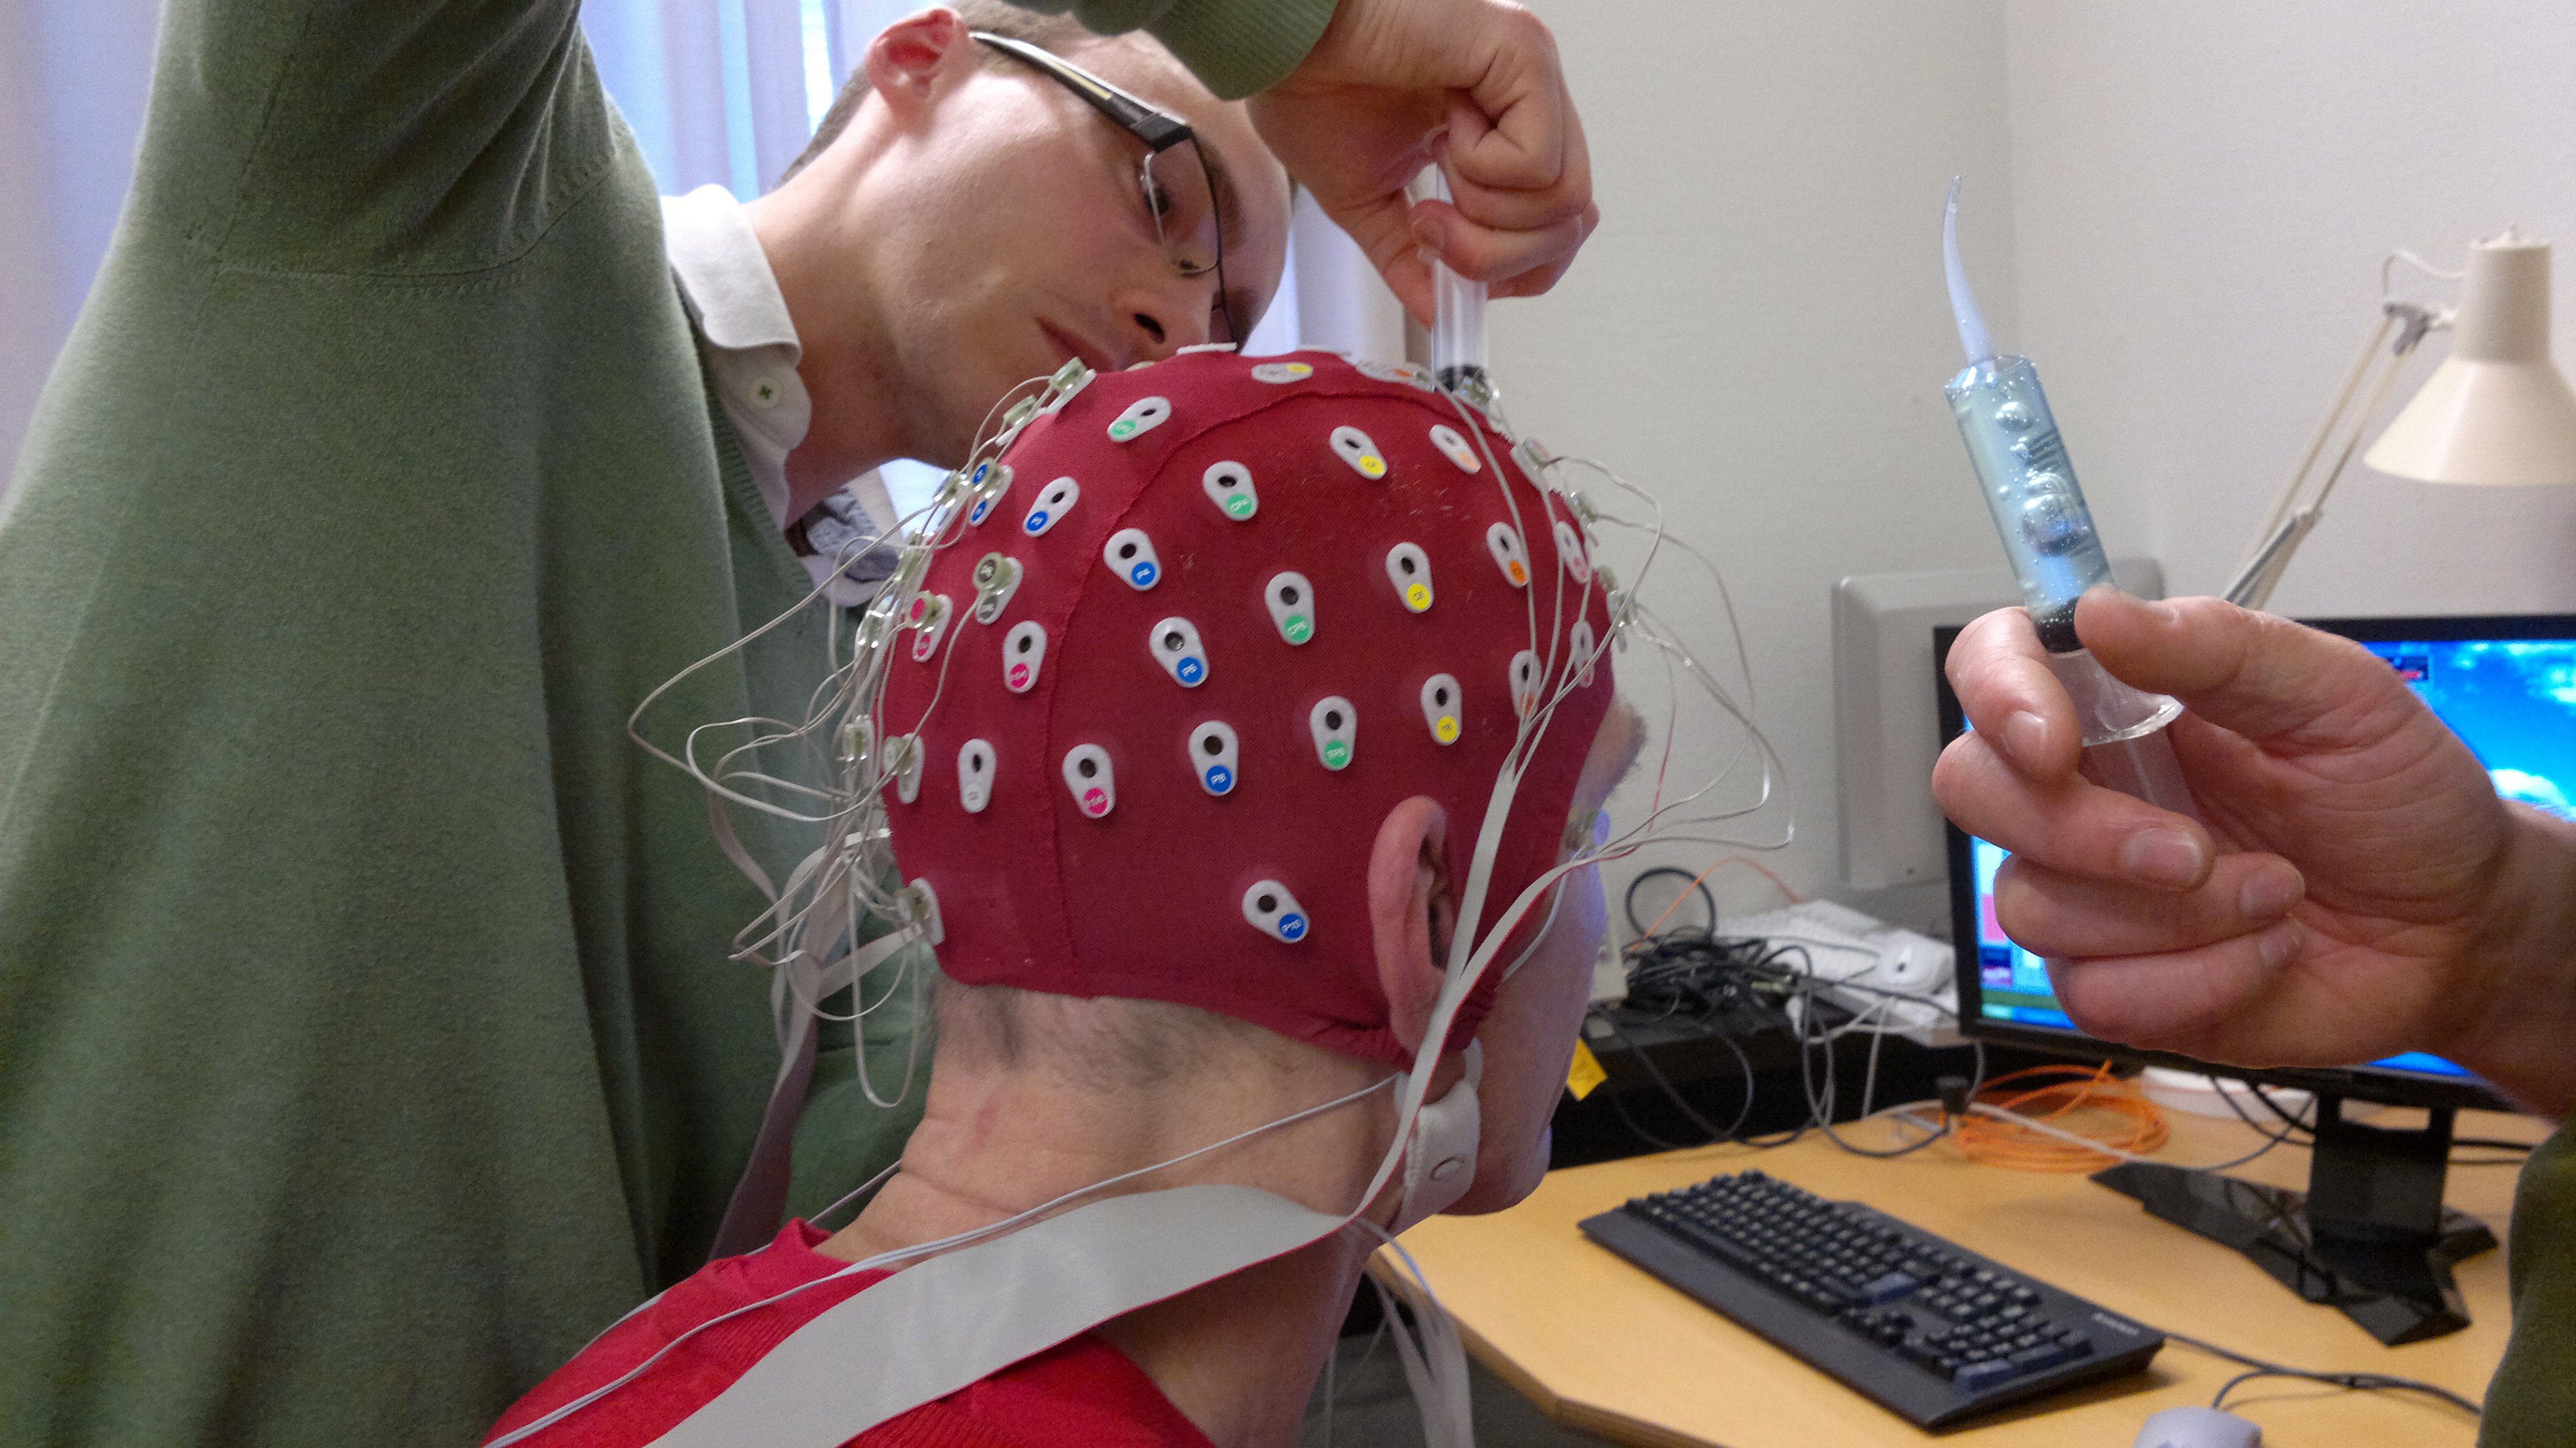 Делают ээг год. Электроэнцефалограмма головного мозга. Электроэнцефалография (ЭЭГ). РЭГ И ЭЭГ. ЭЭГ (электроэнцефалограмма) головного мозга.